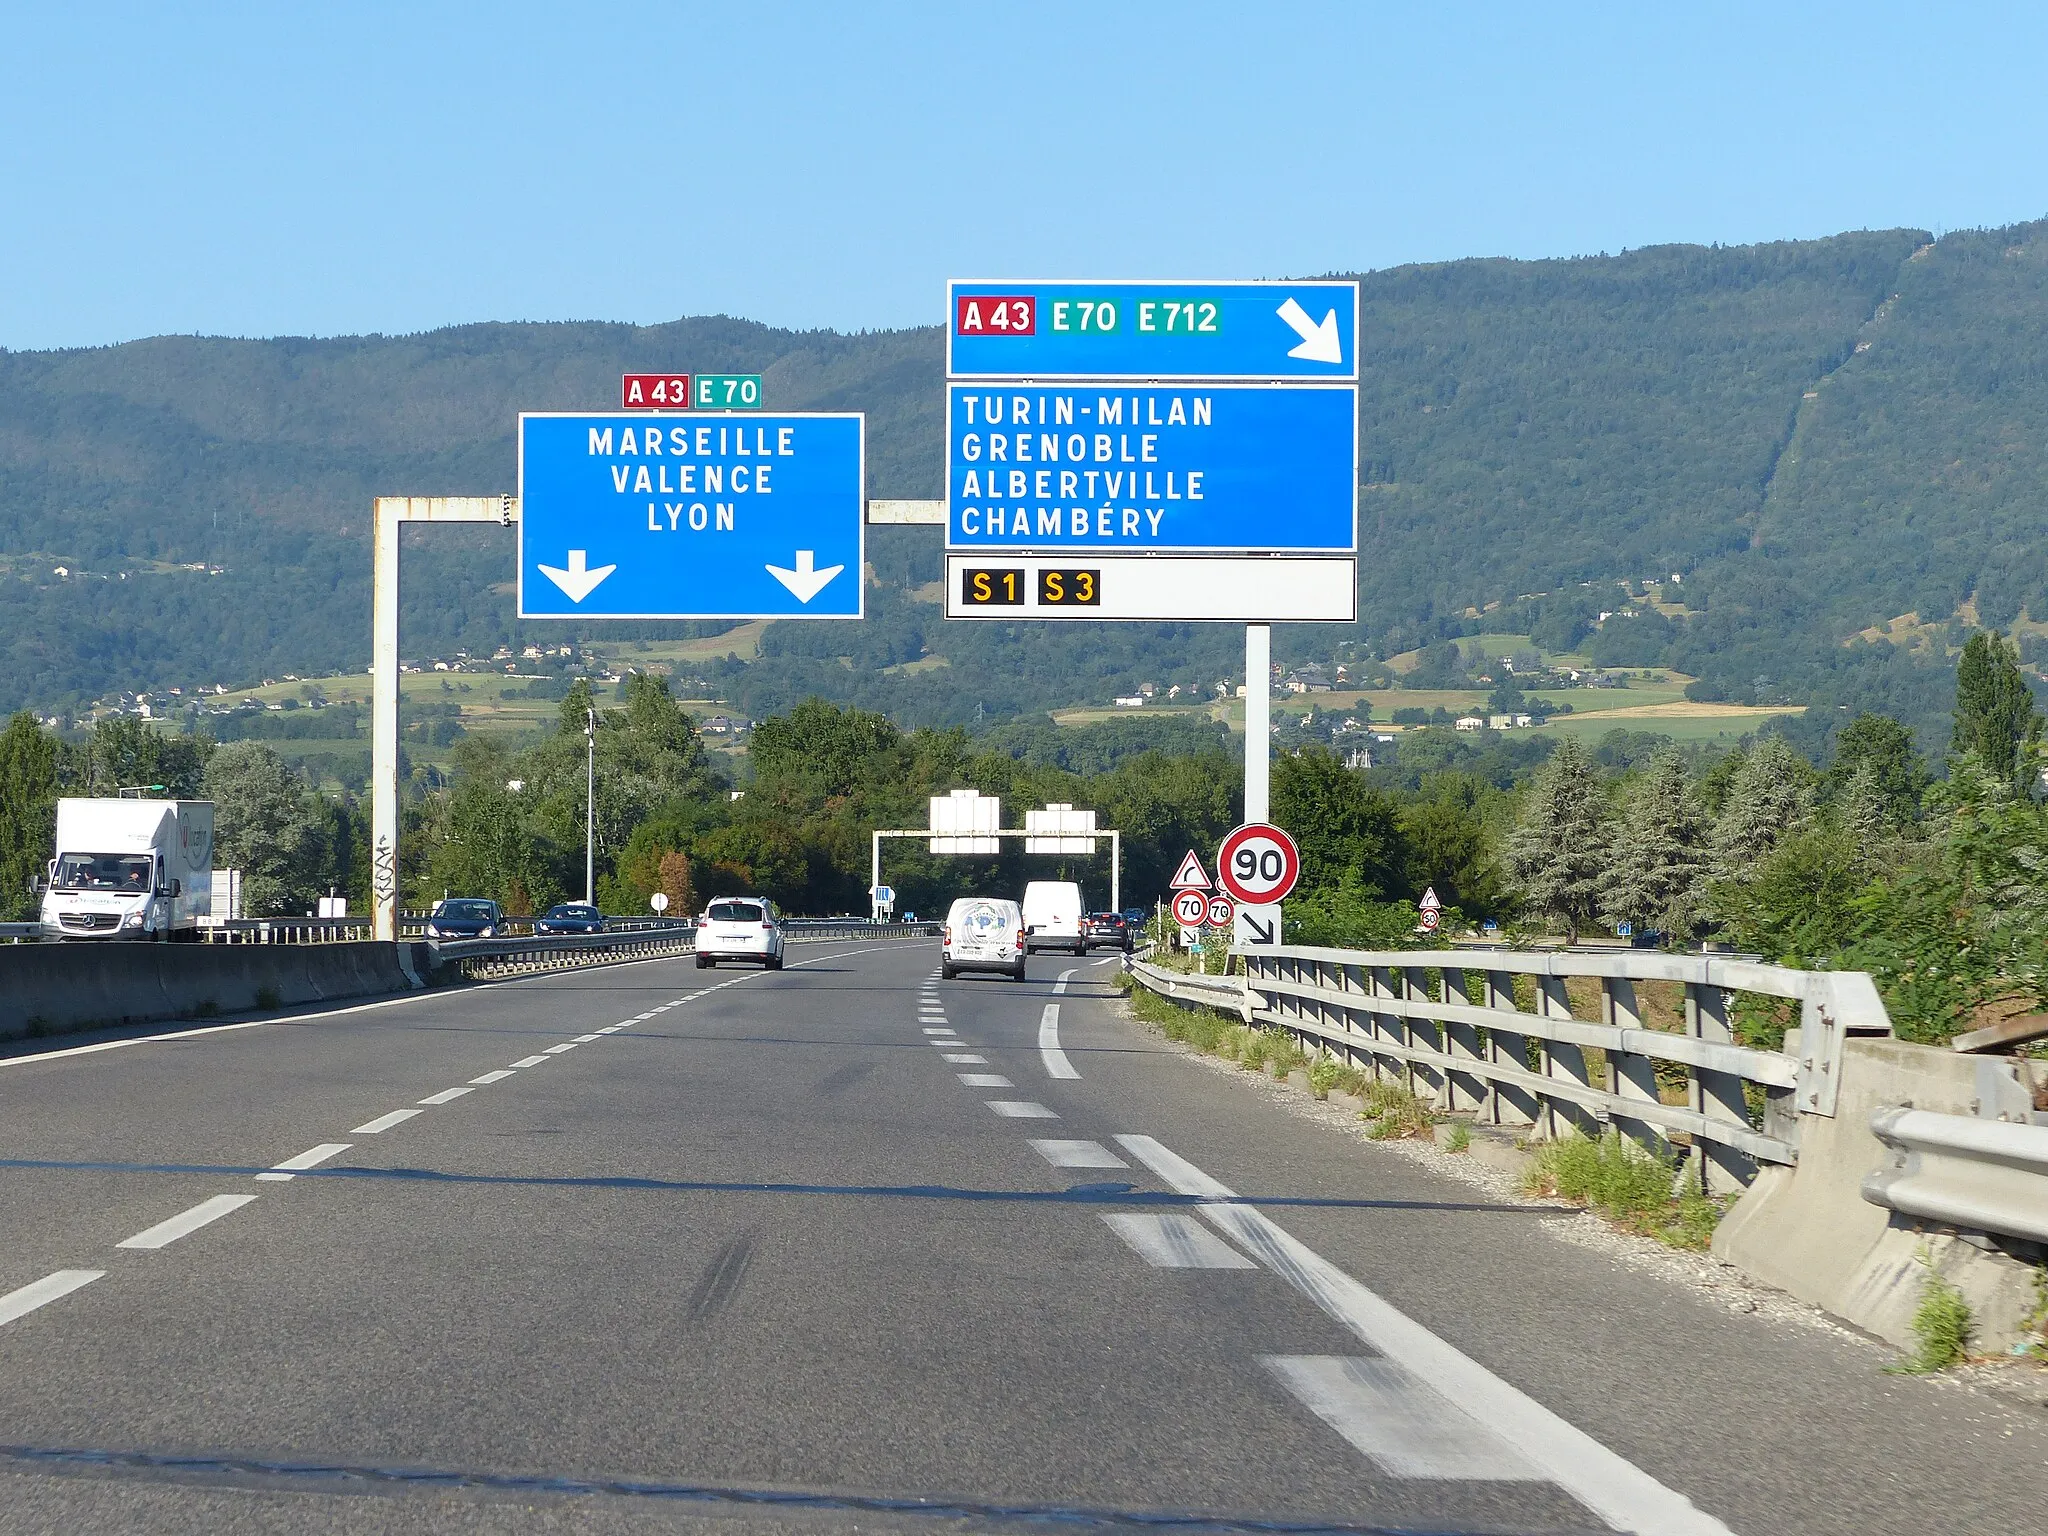 Photo showing: Panneaux D62c et D31f A43 E70 E712, B14 90 km/h, autoroute A41, La Motte-Servolex, Savoie, France.